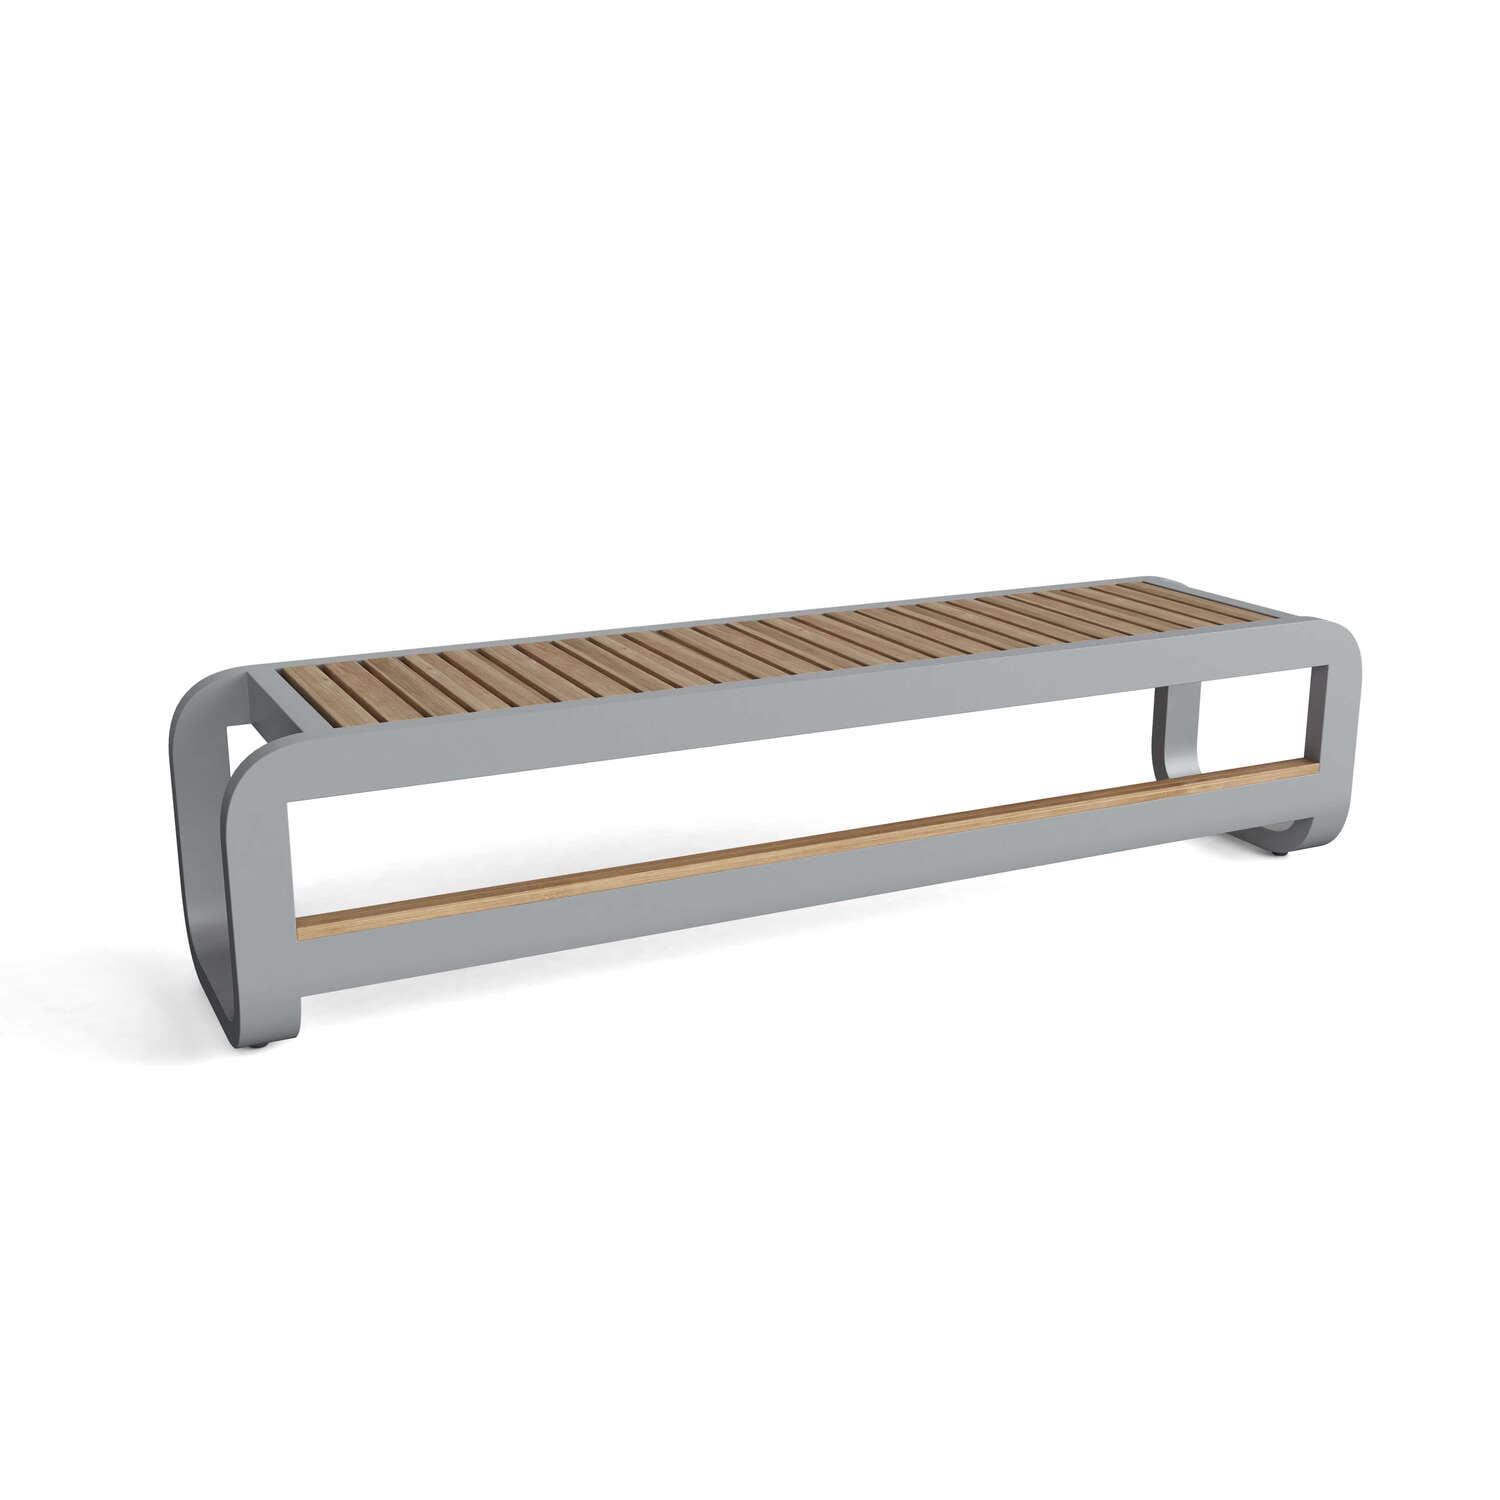 Monza Modern-Contemporary 3-Seater Bench in Natural Teak & Grey Aluminum